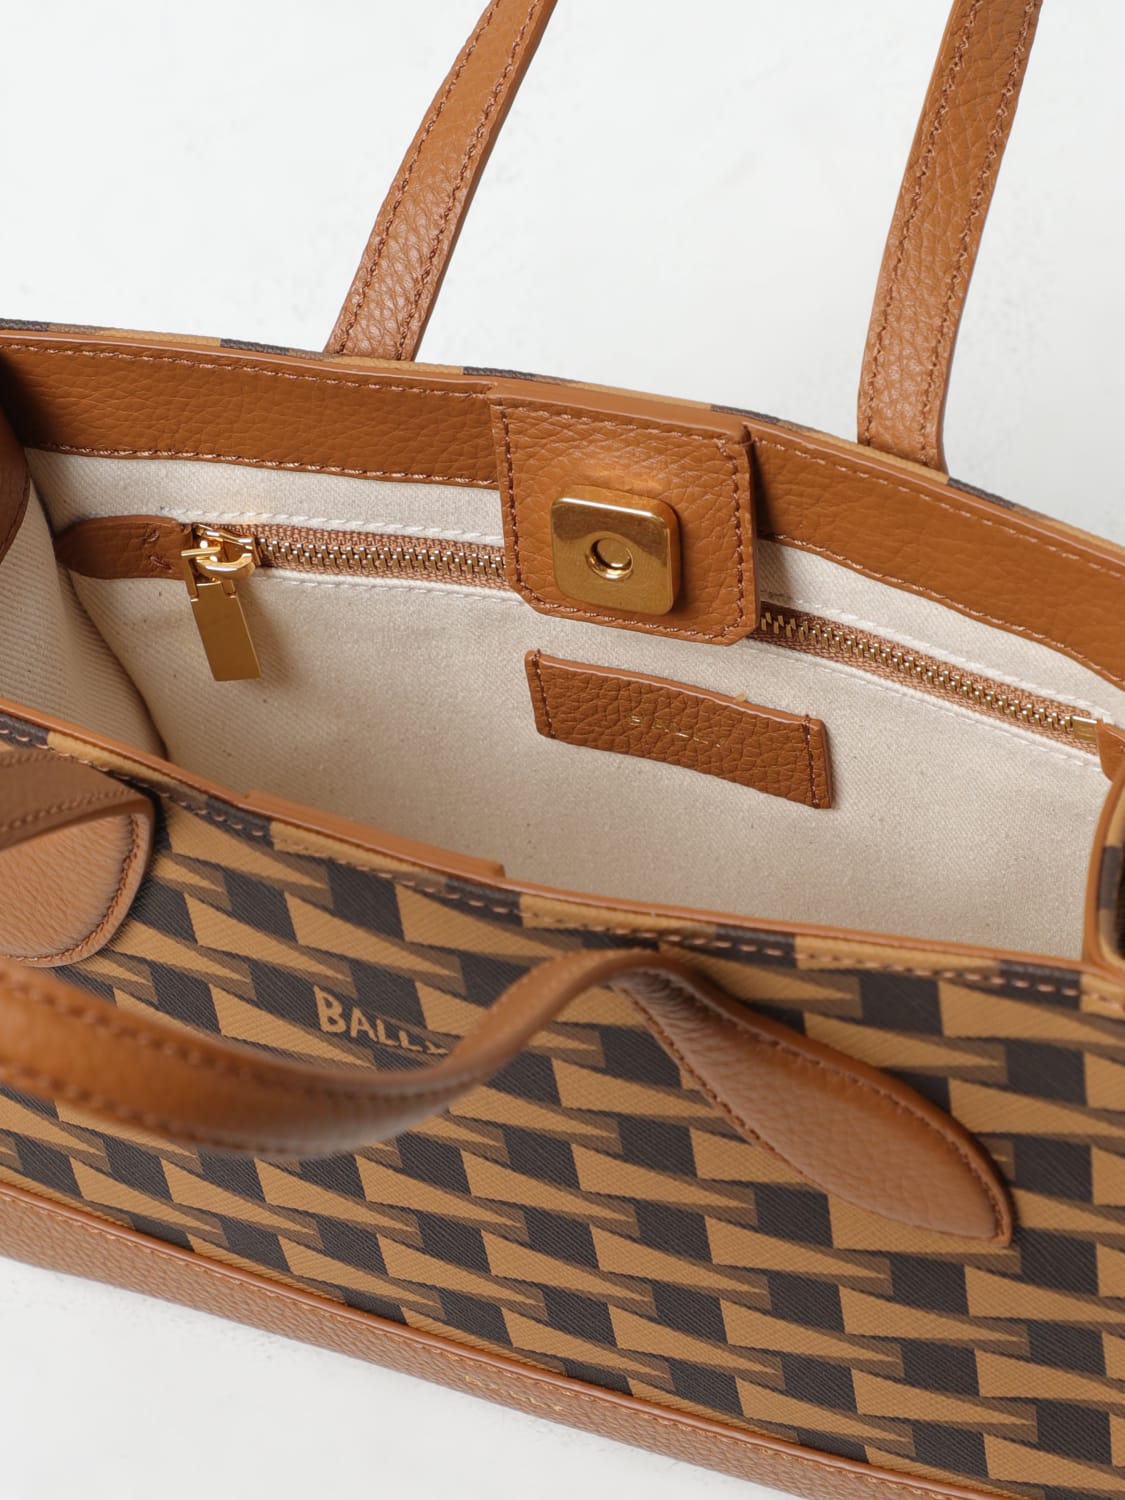 Kensington Louis Vuitton Handbags for Women - Vestiaire Collective